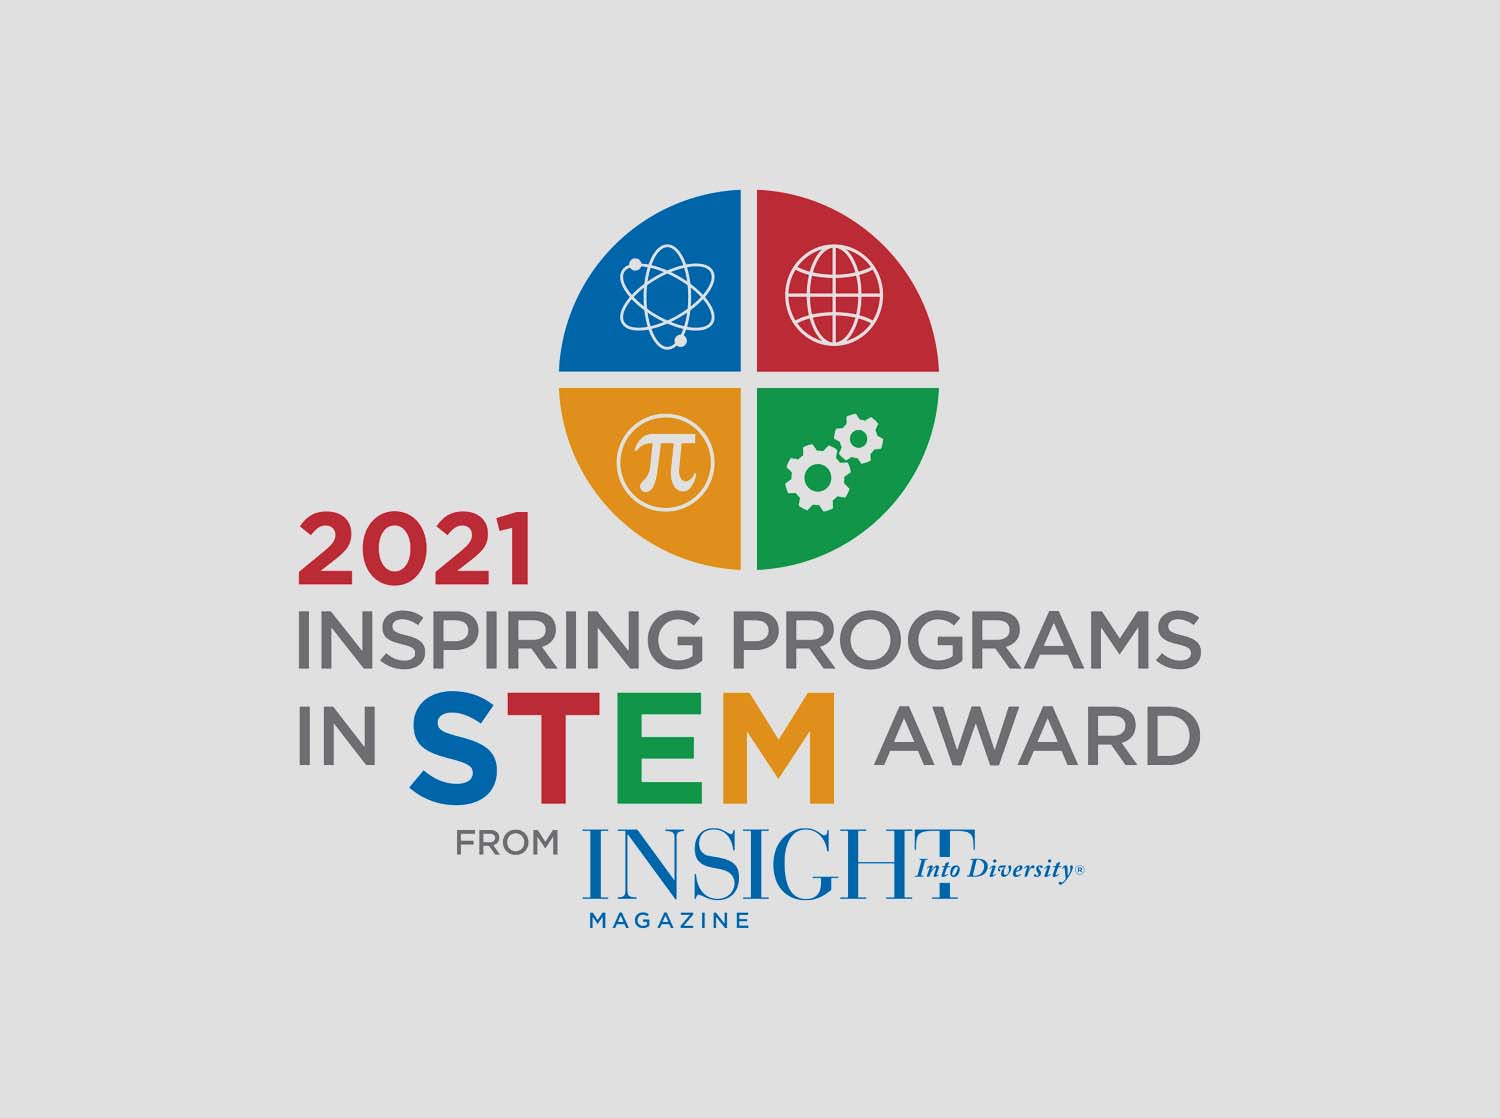 2021 Inspiring Programs in Stem Award from Insight into Diversity Magazine